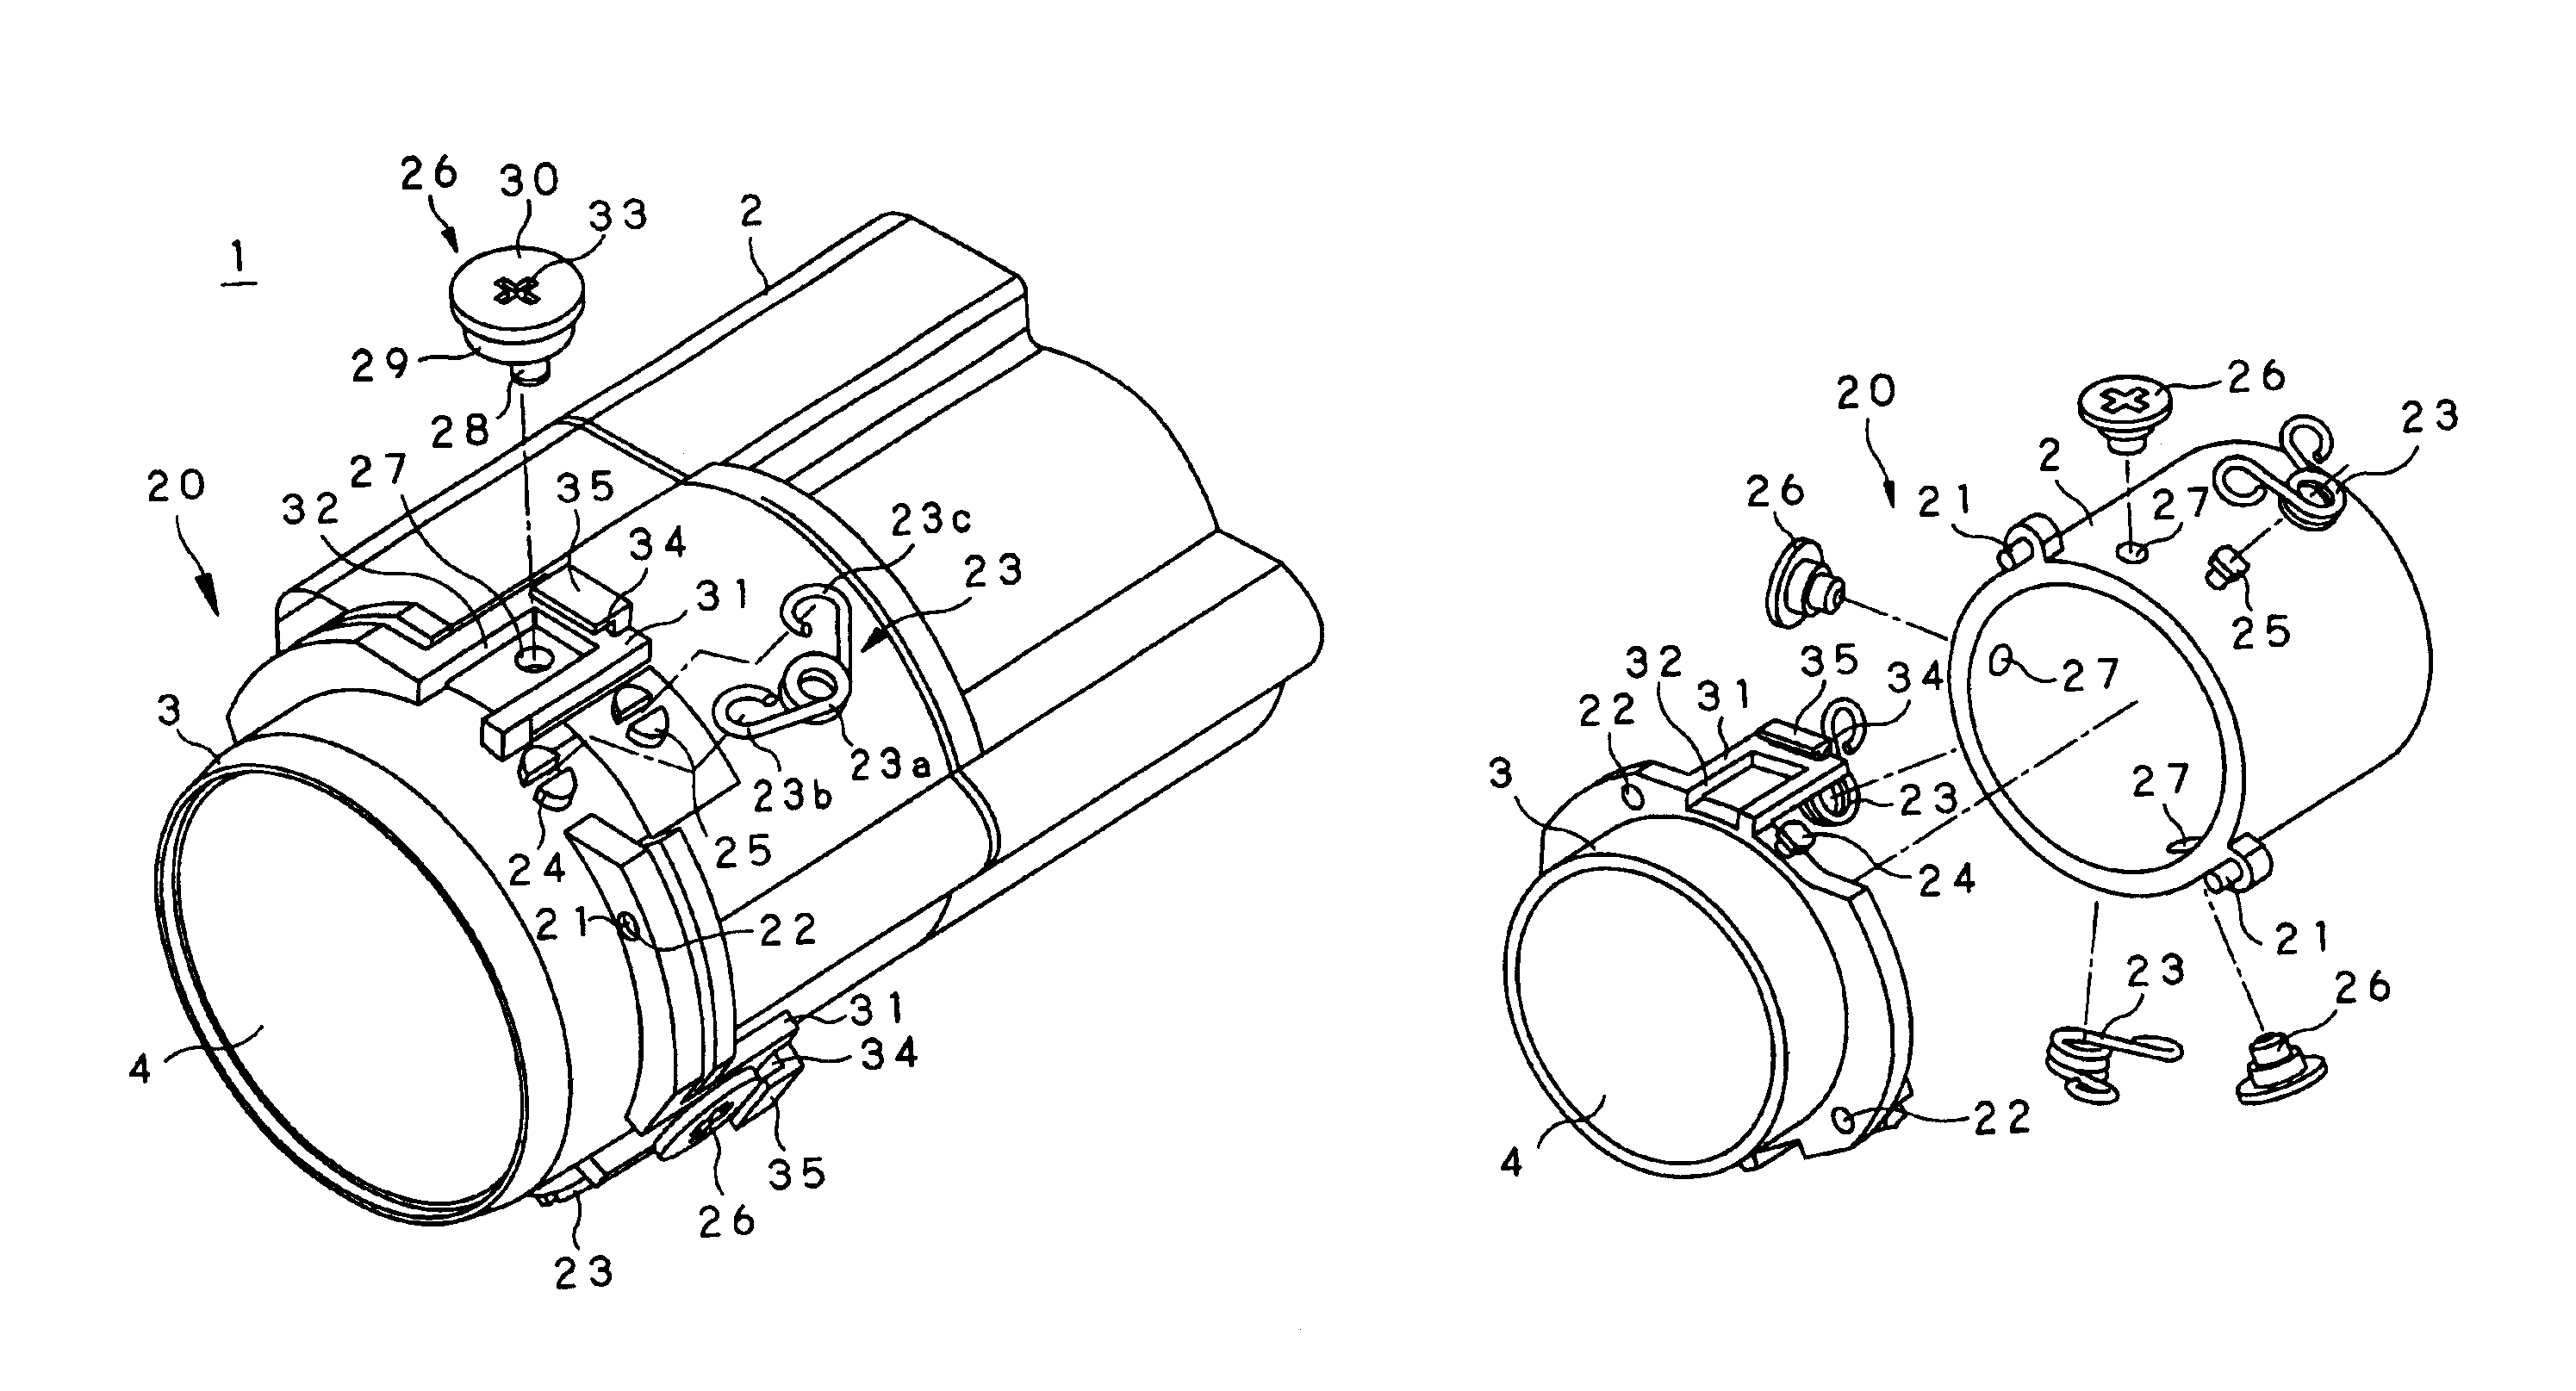 Lens centering mechanism, lens apparatus and imaging apparatus